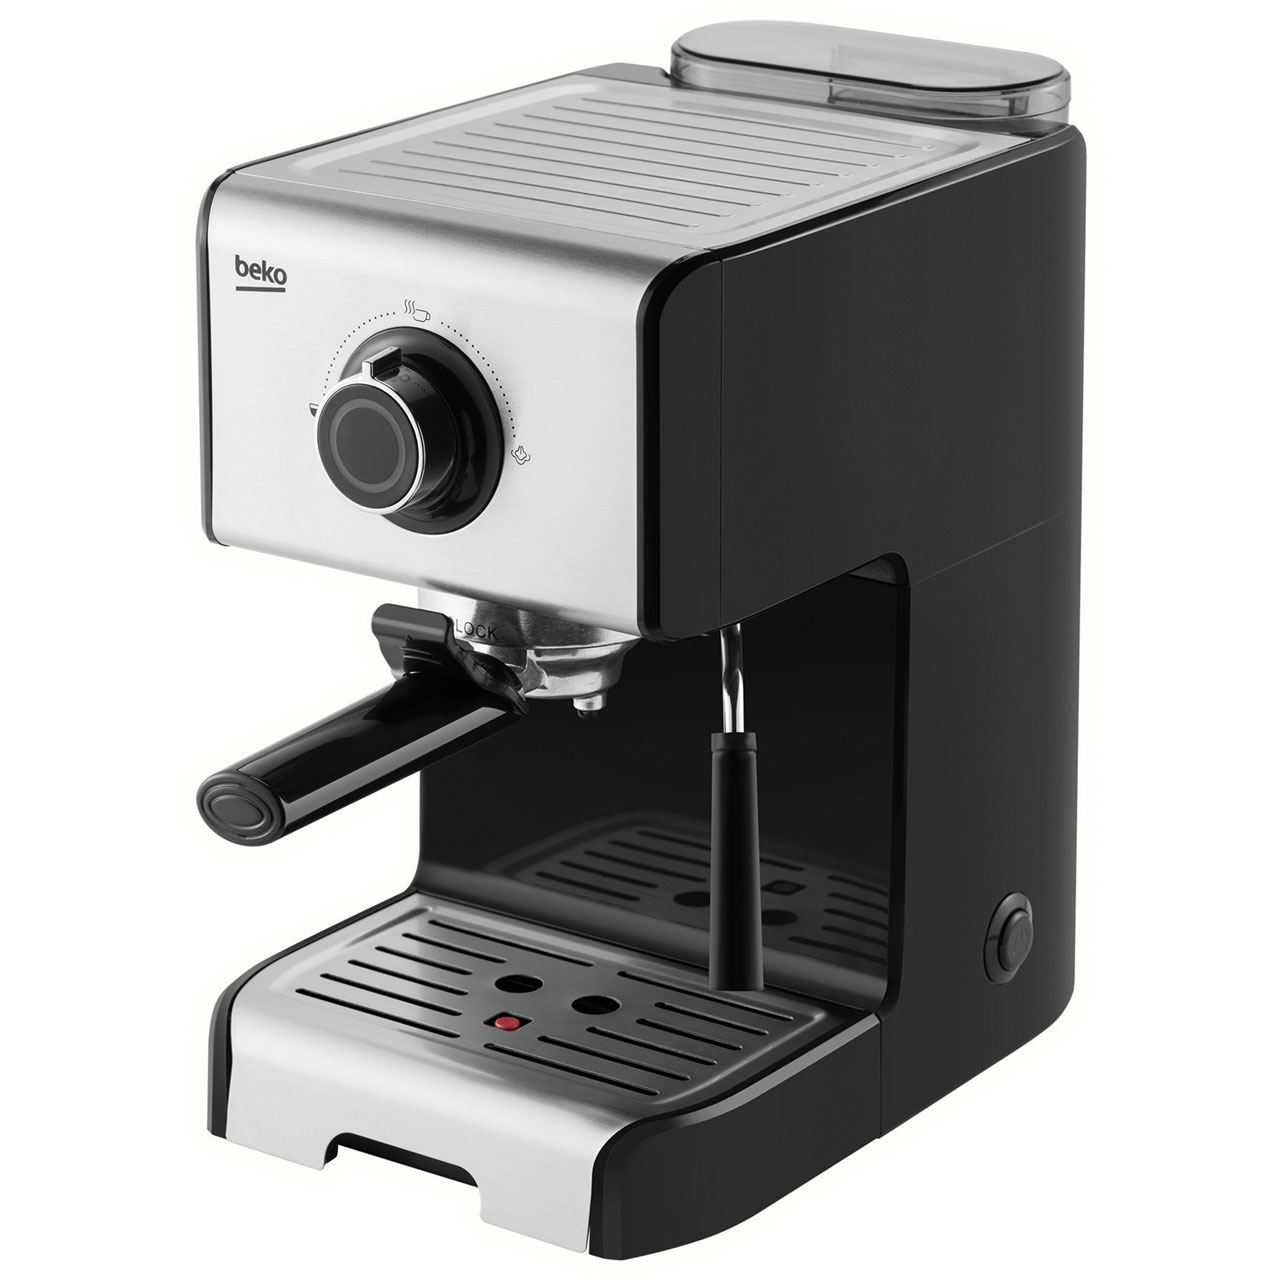 Beko CEP5152B Espresso Coffee Machine 15 bar Black New from AO